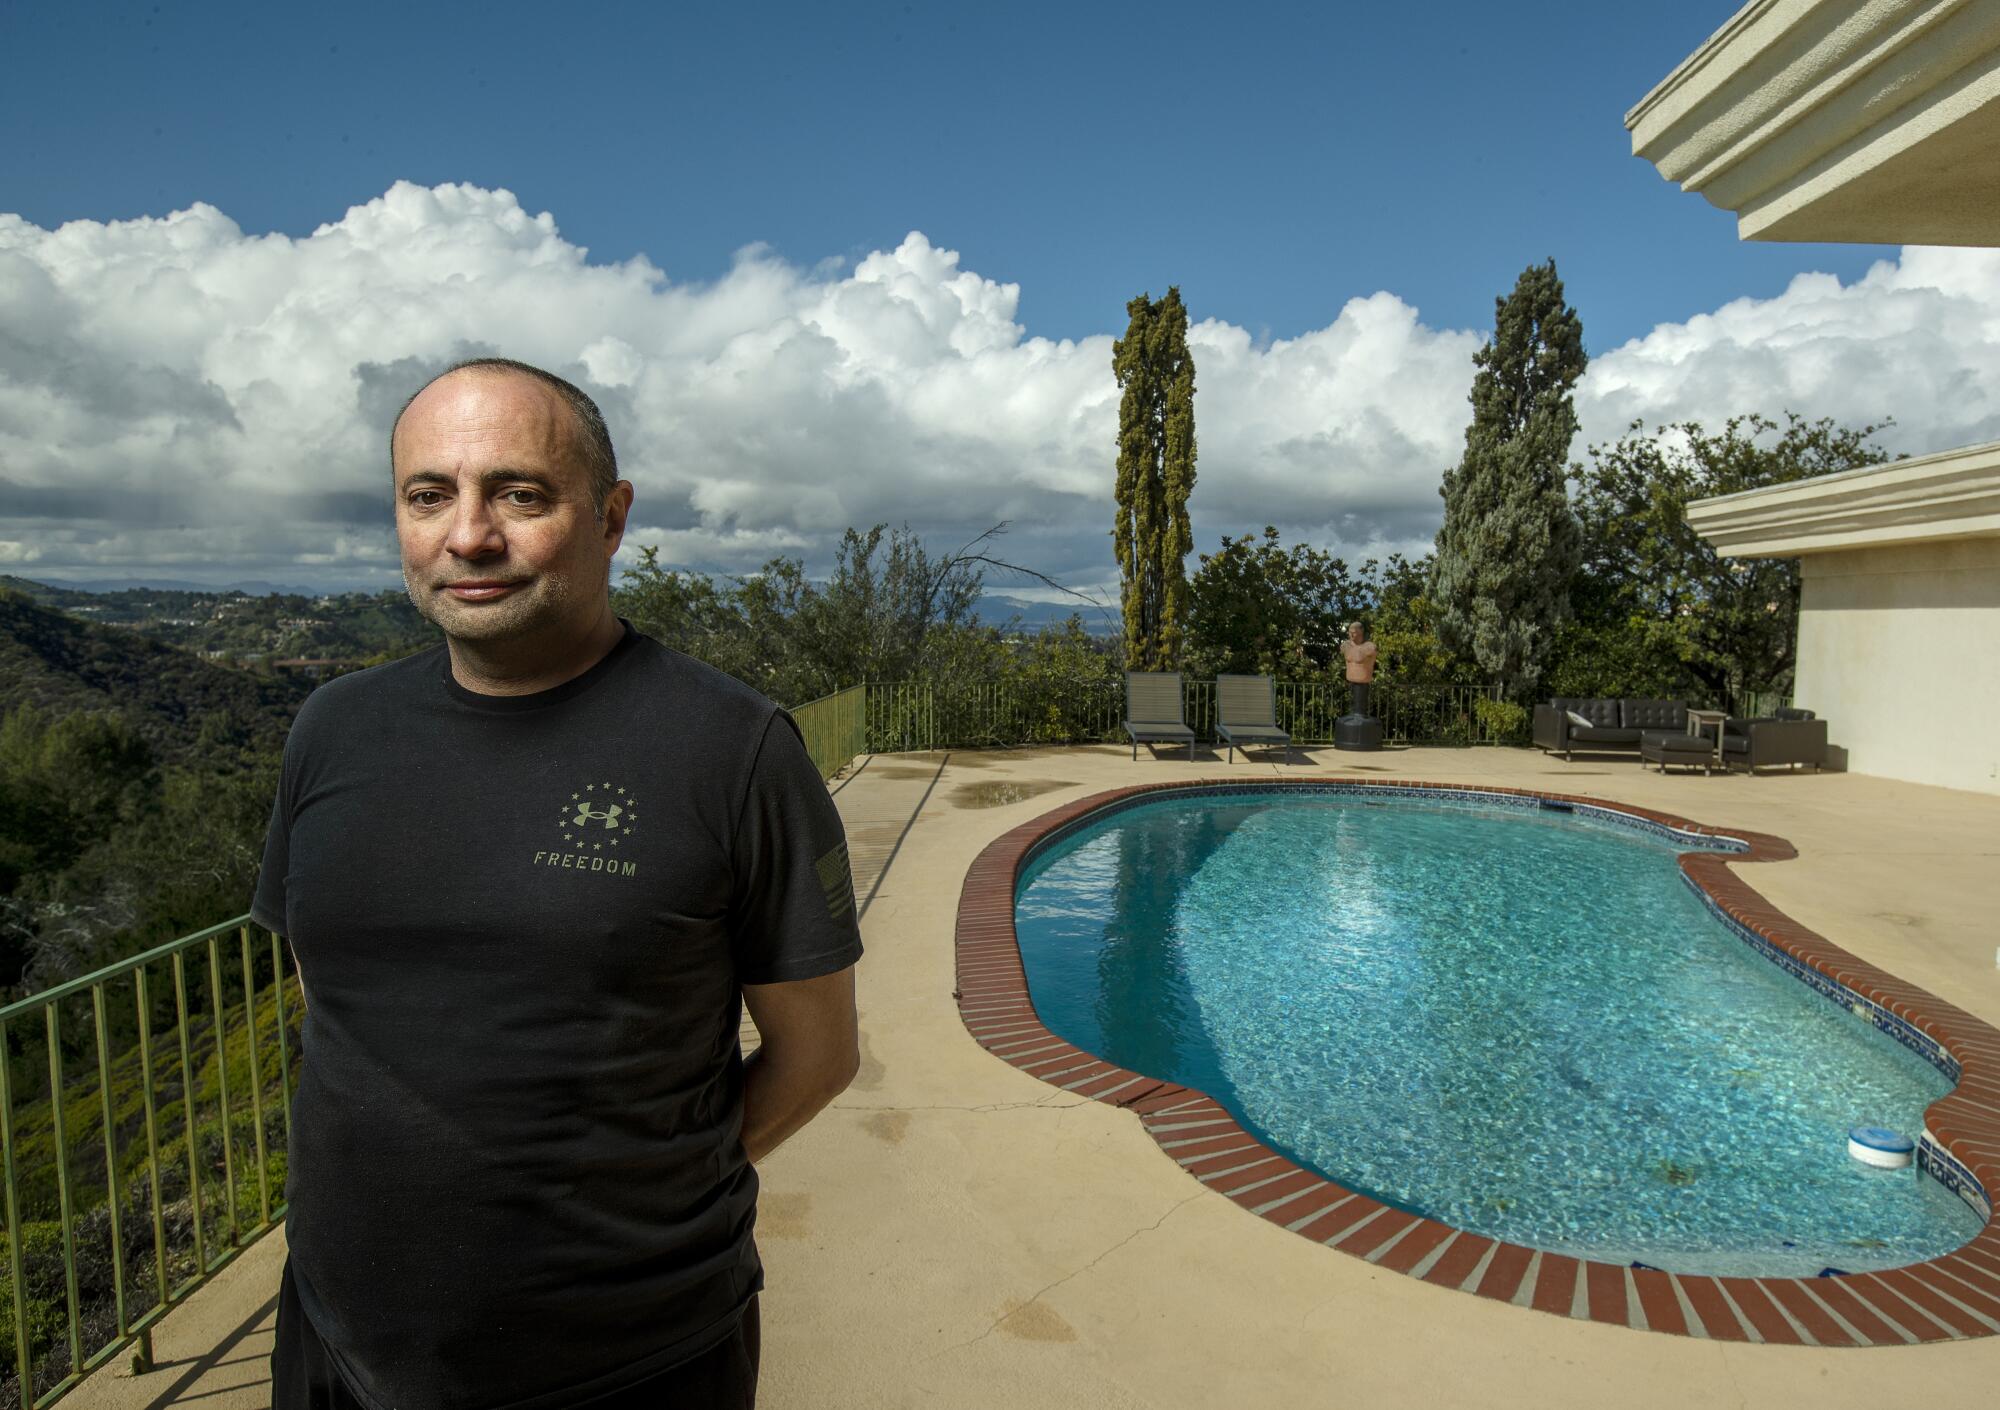 Ashot Yegiazaryan stands near a swimming pool at his home